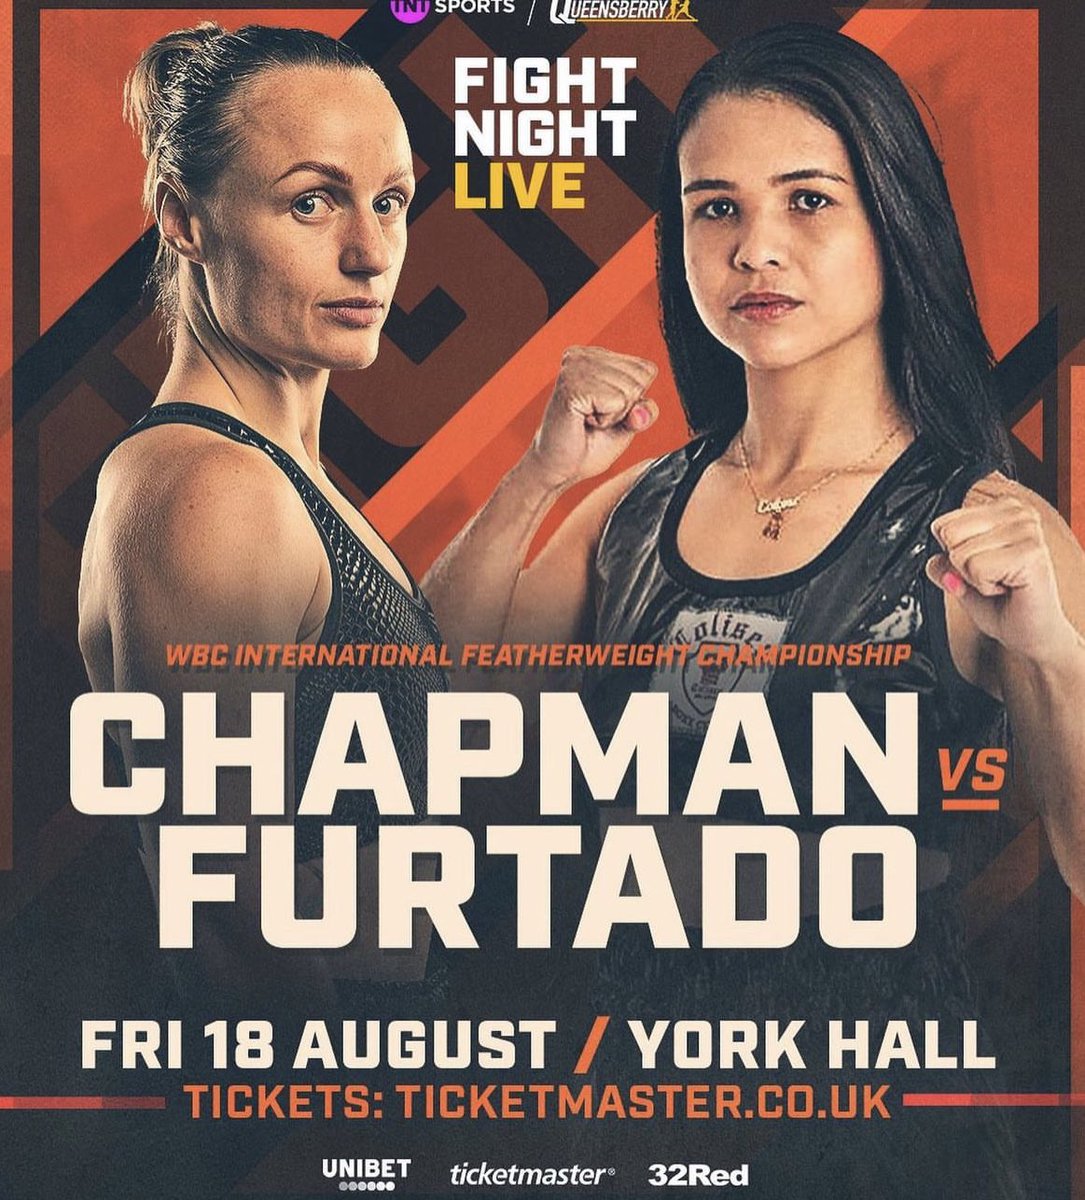 #FightWeek UK’s WBC International Feather champ @ravenchapman01 (6-0, 2KOs) defends her title against Brazil’s Lila dos Santos Furtado (9-0, 1KO) Friday @YorkHallEvents